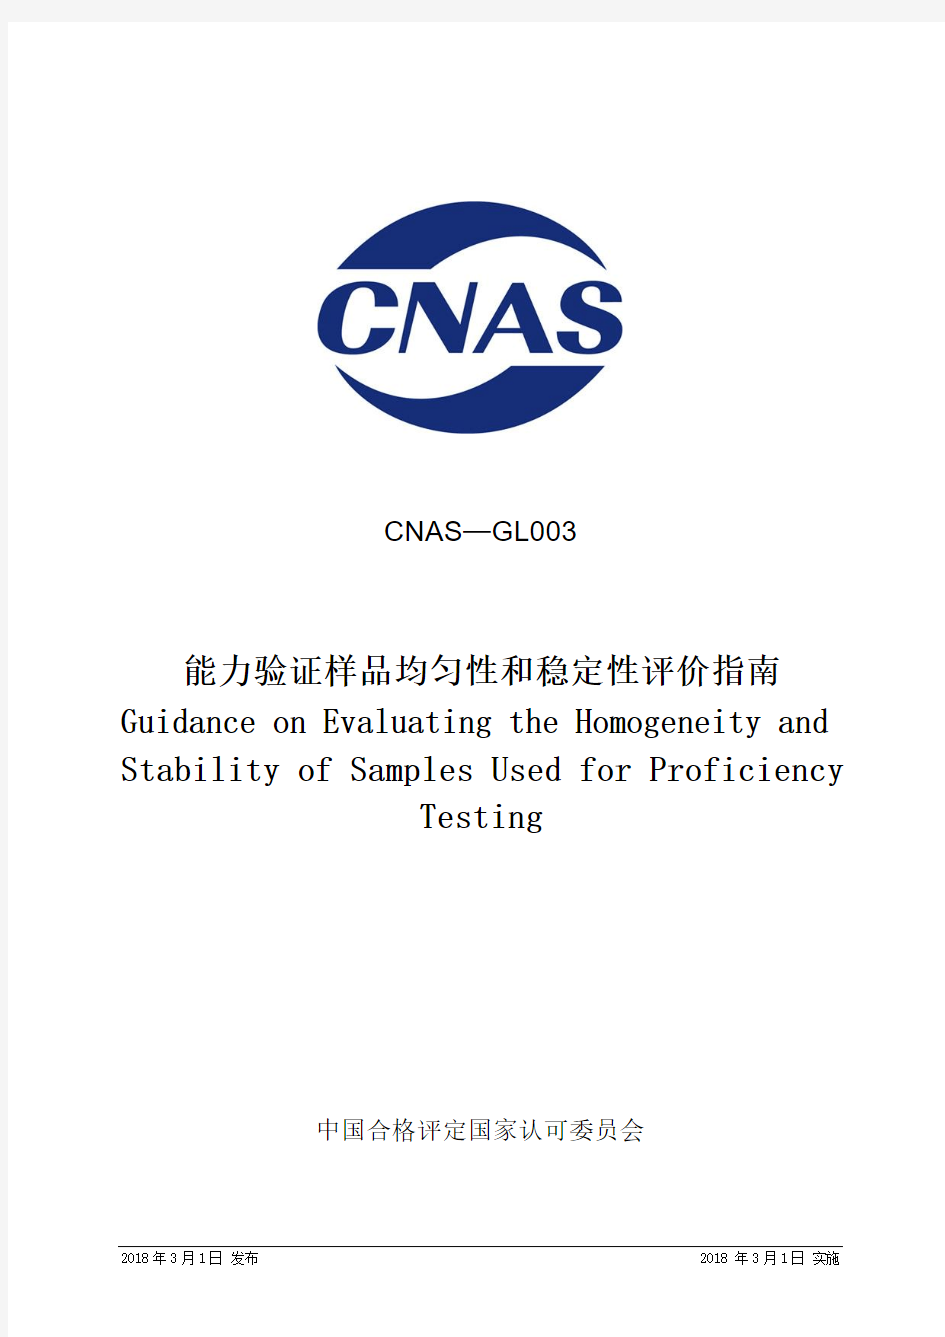 CNAS-GL003-2018 能力验证样品均匀性和稳定性评价指南.pdf